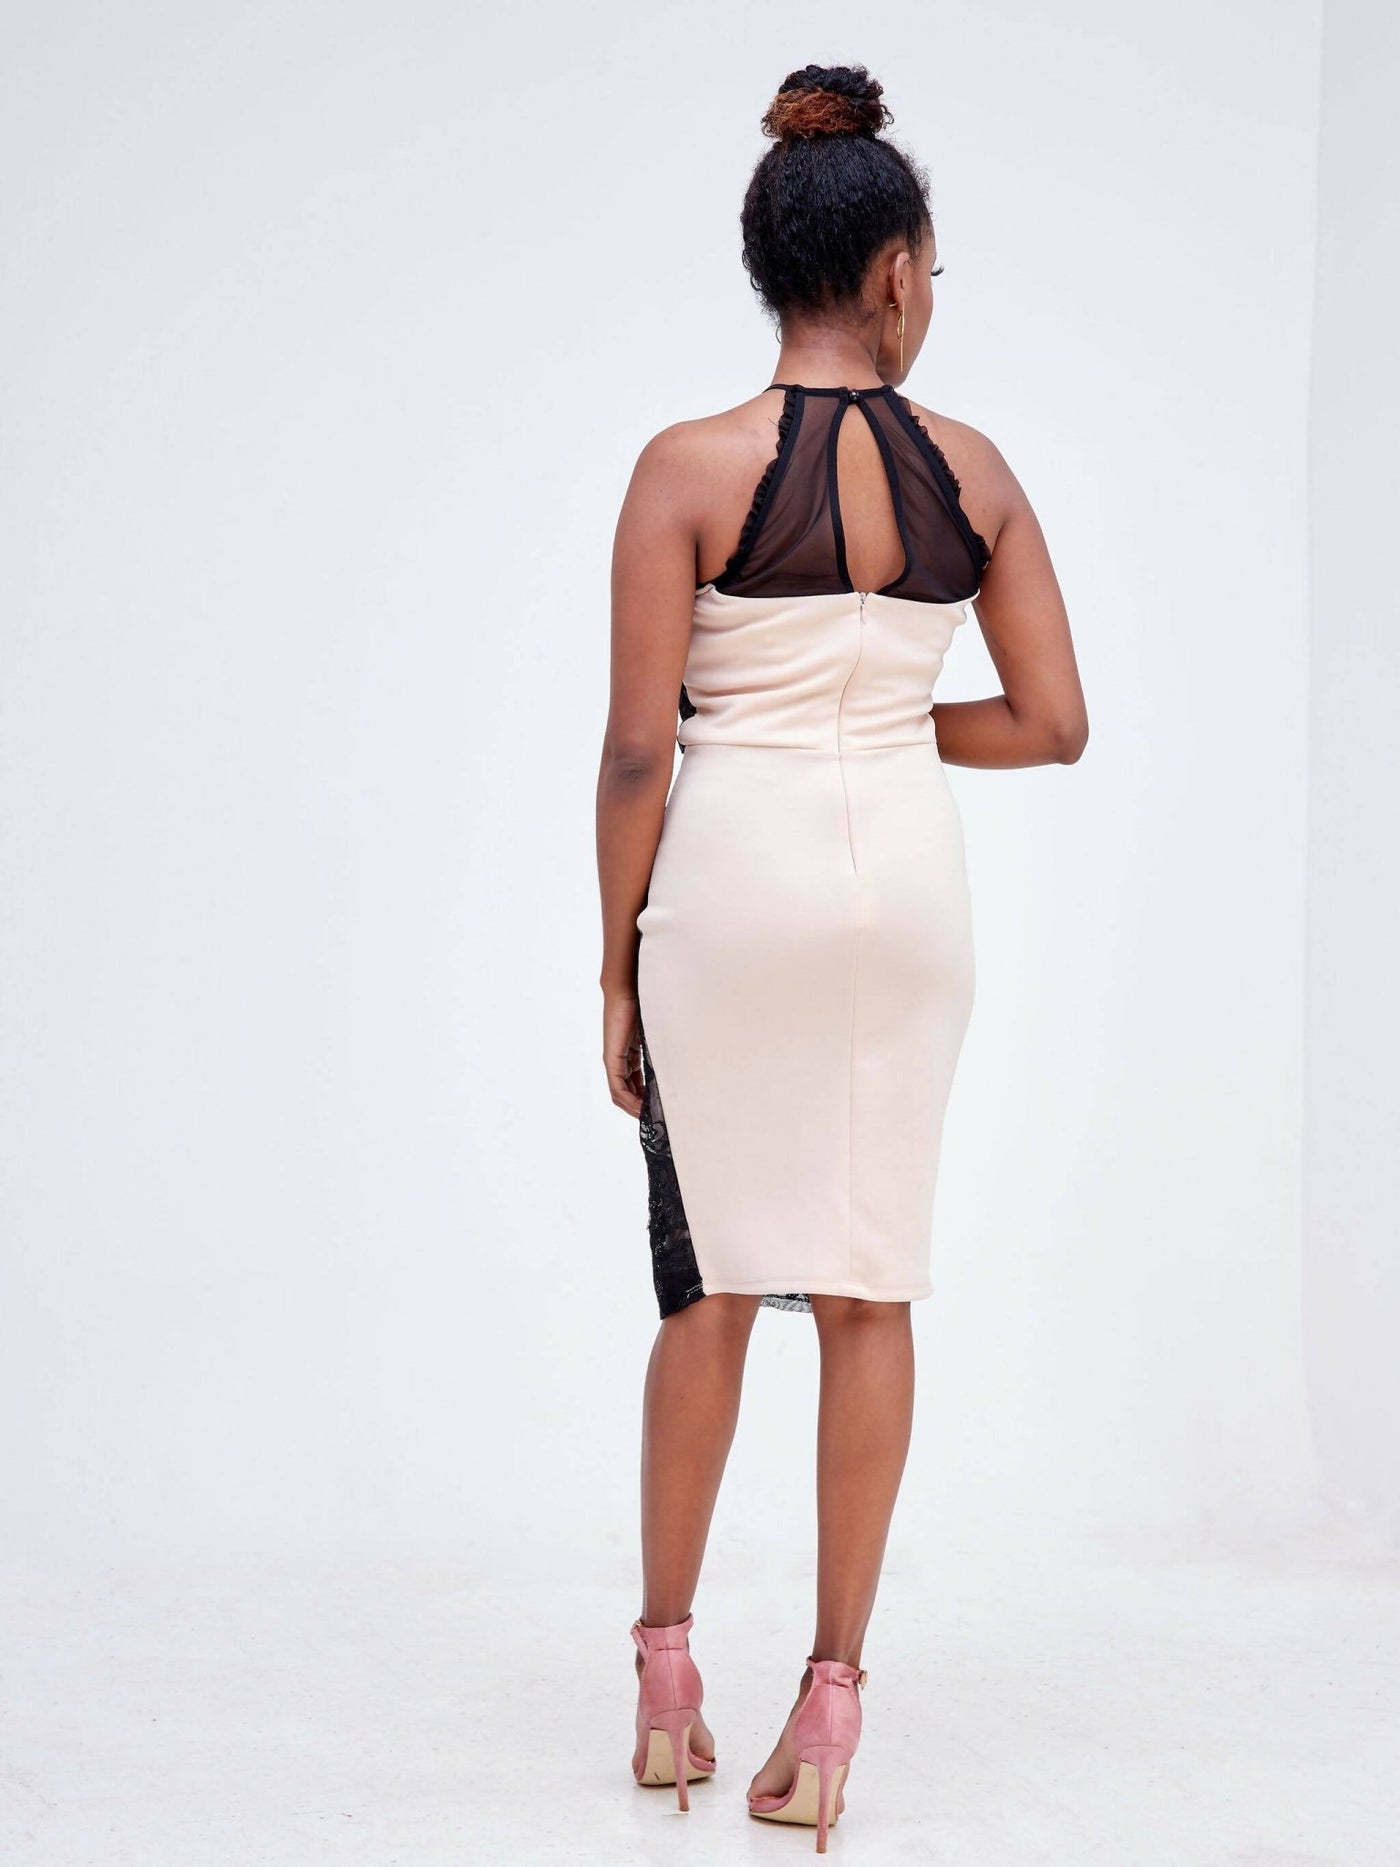 Zola Peach Lace Dress - Black - Shop Zetu Kenya